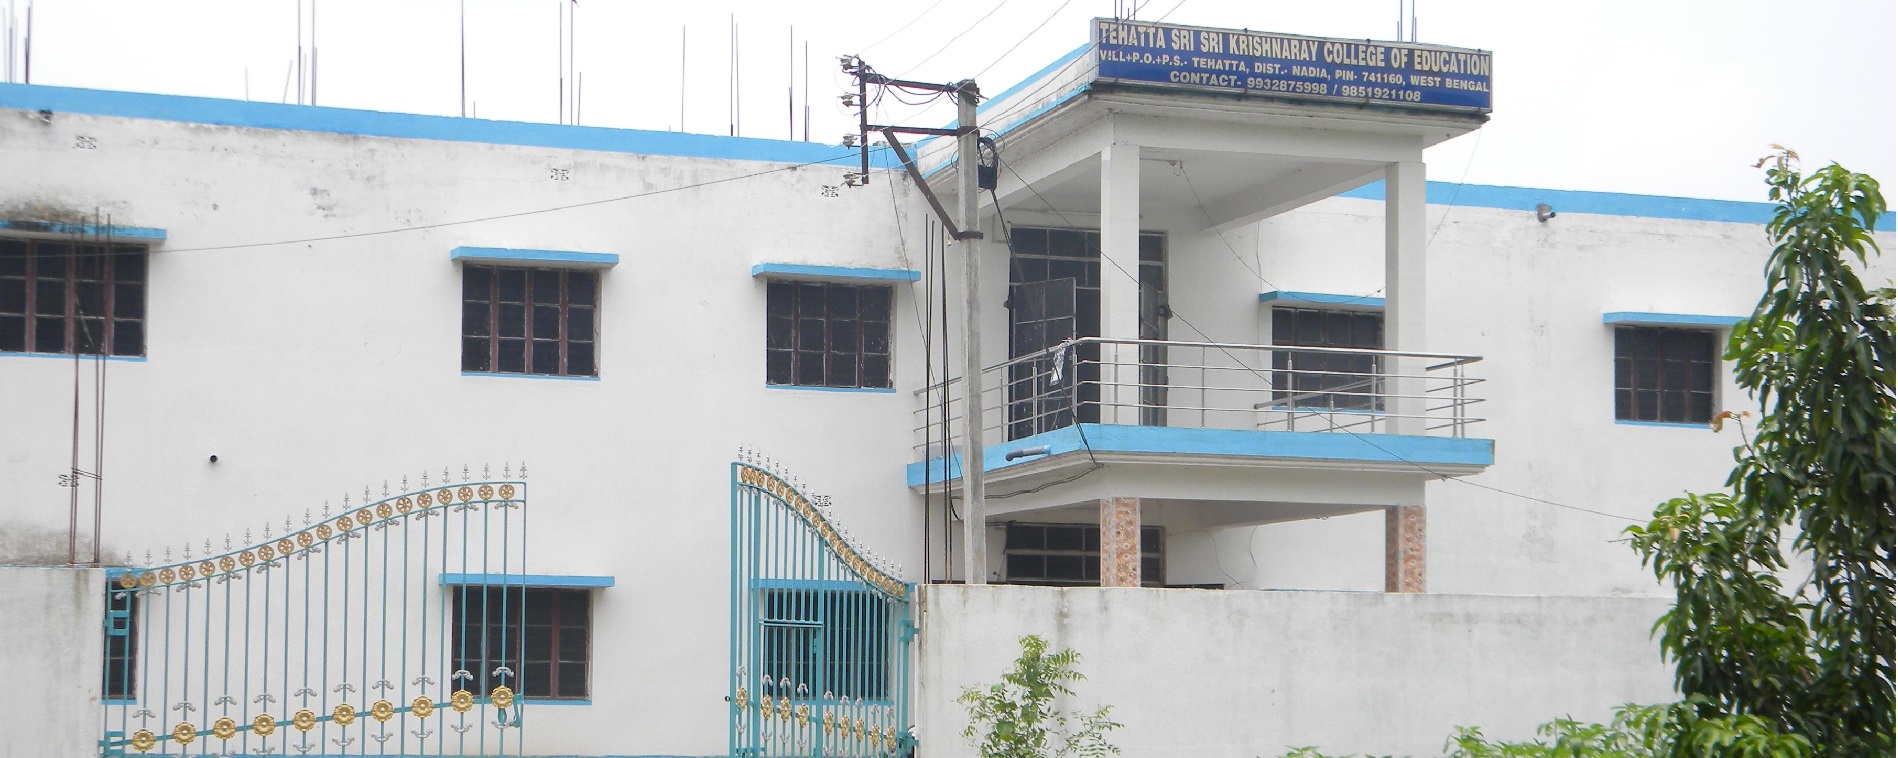 Tehatta Sri Sri Krishnaray College of Education